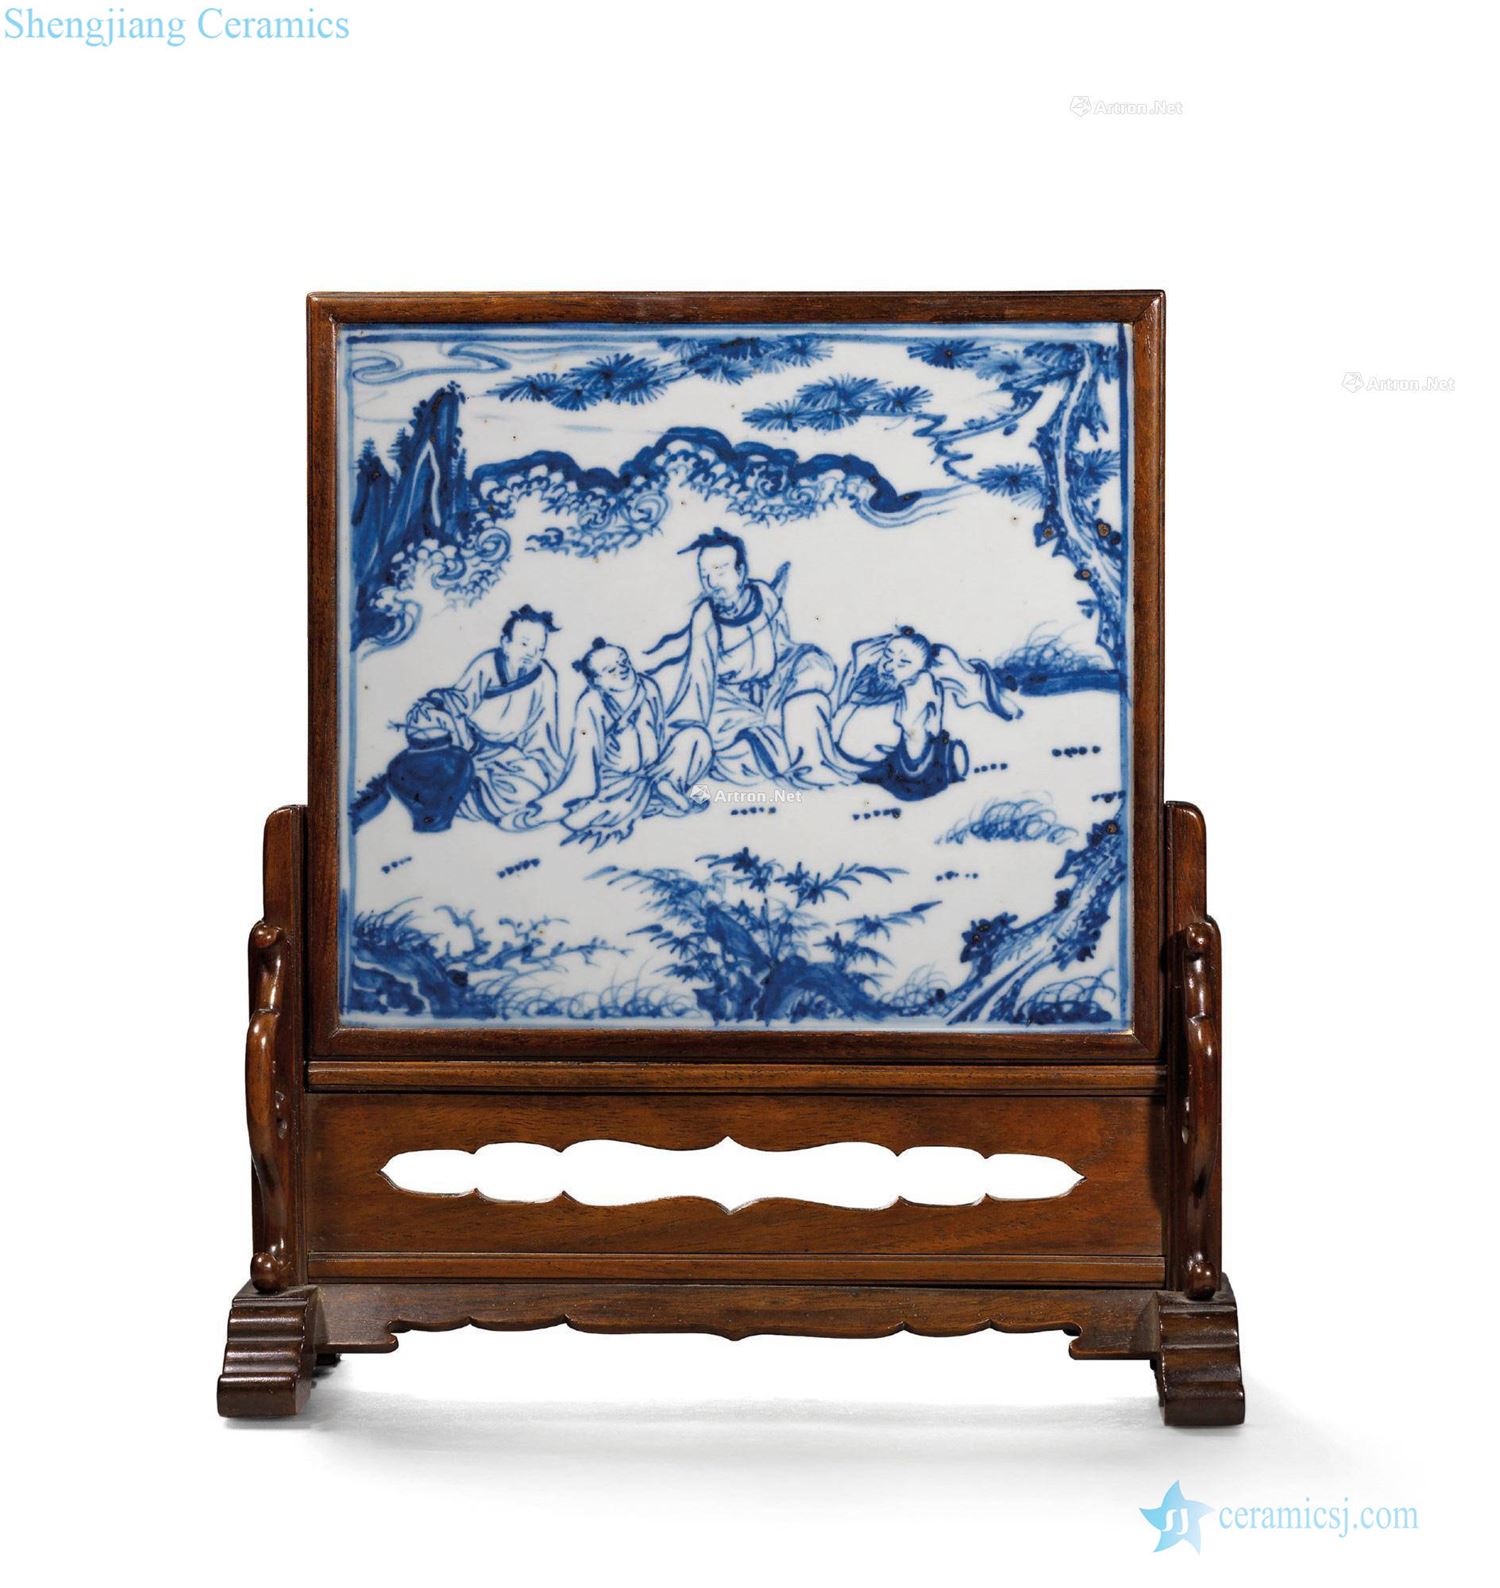 About 1500 years Blue four xian figure oblong porcelain plate